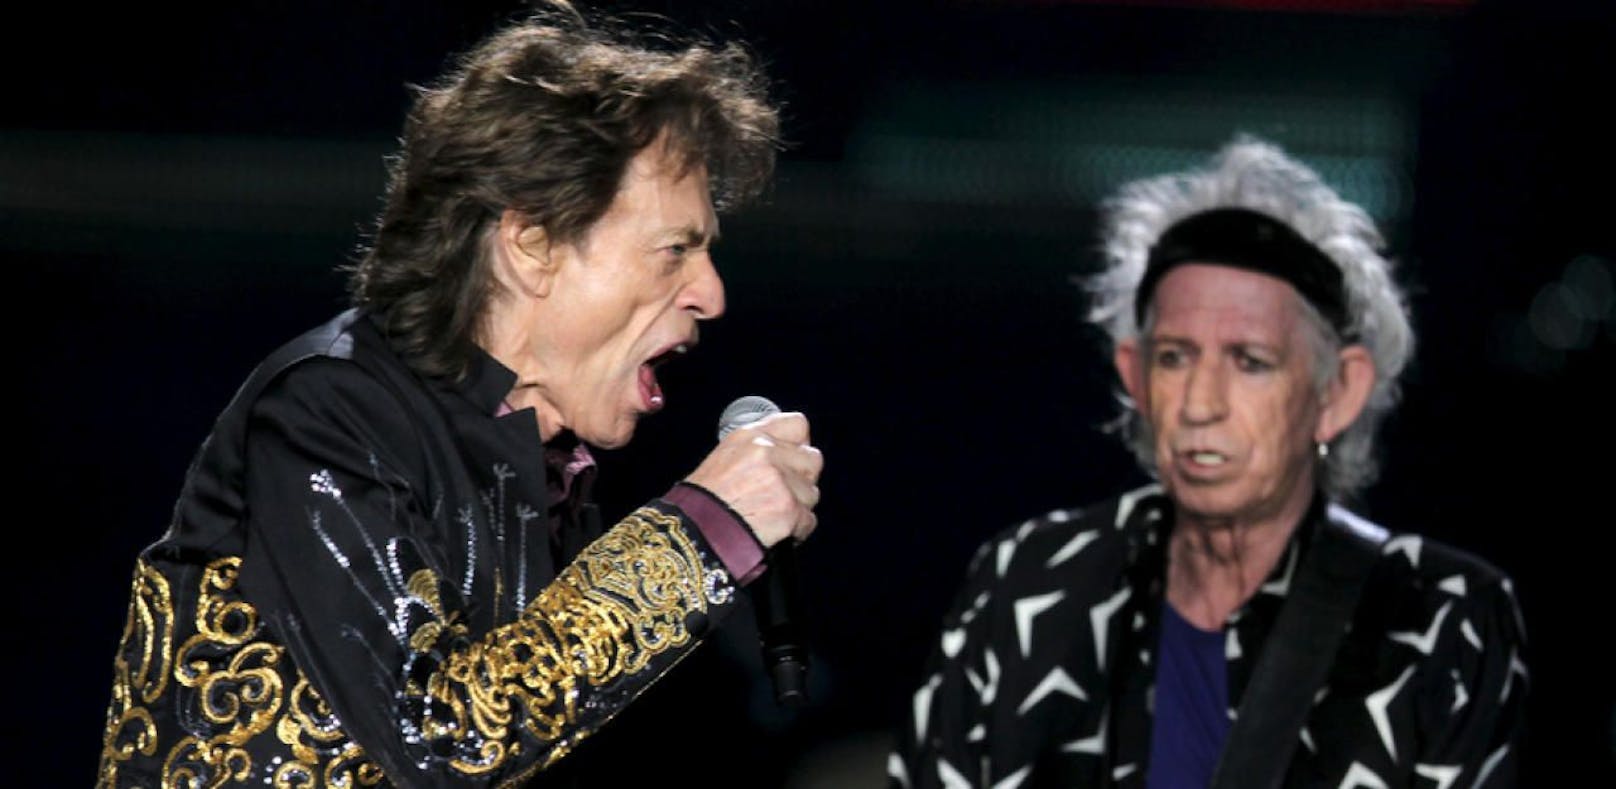 "Absolut jenseitig": Keith sagt sorry zu Mick Jagger